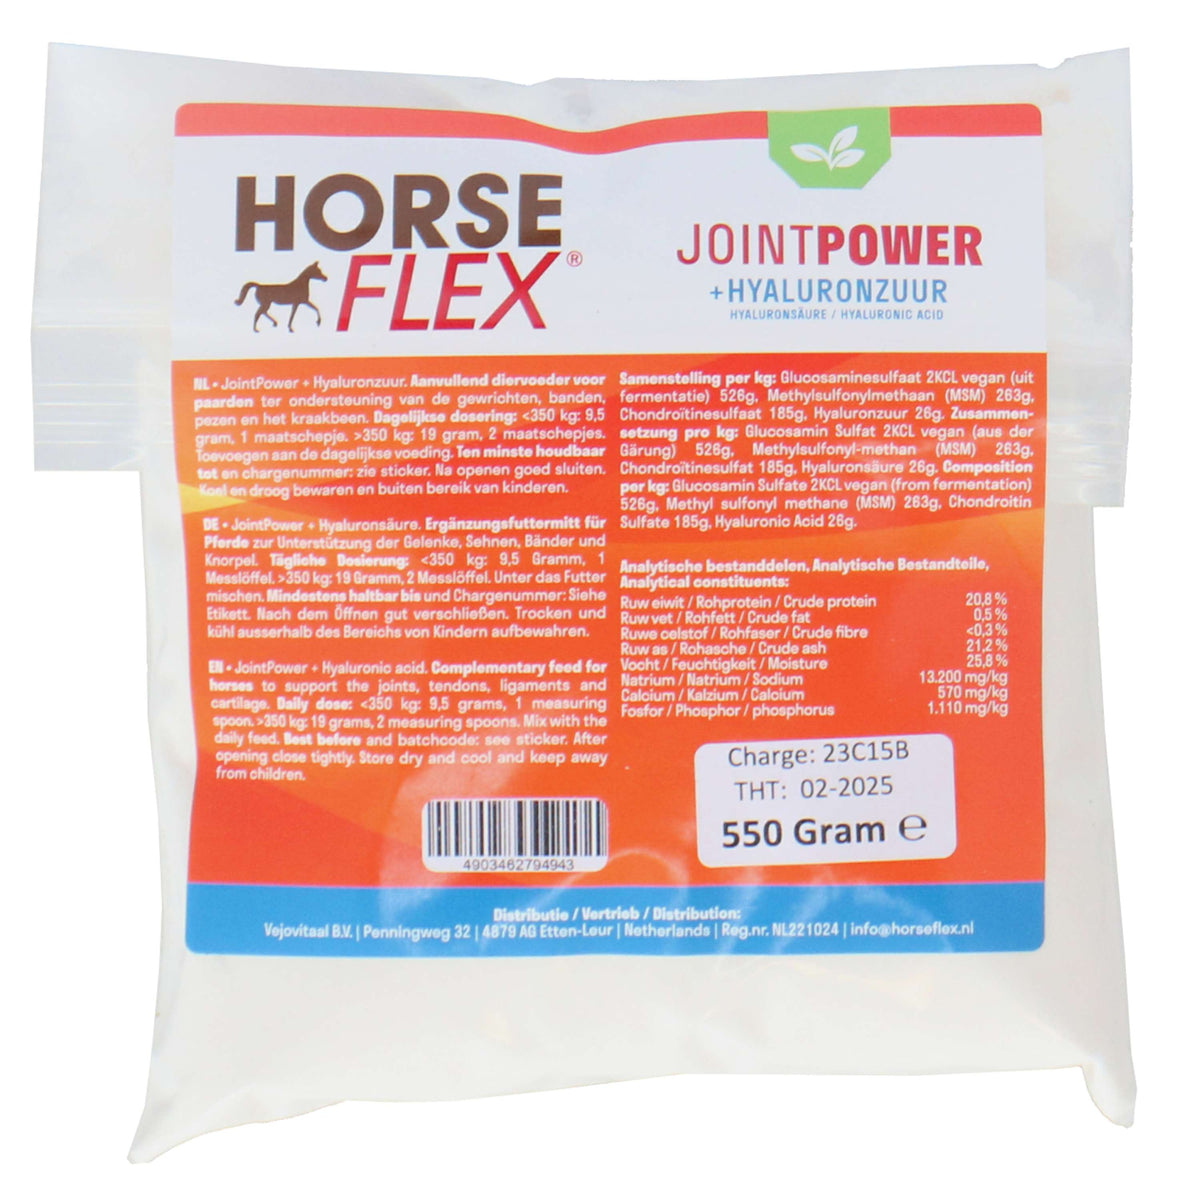 HorseFlex Jointpower + Hyaluronsäure Nachfüllung